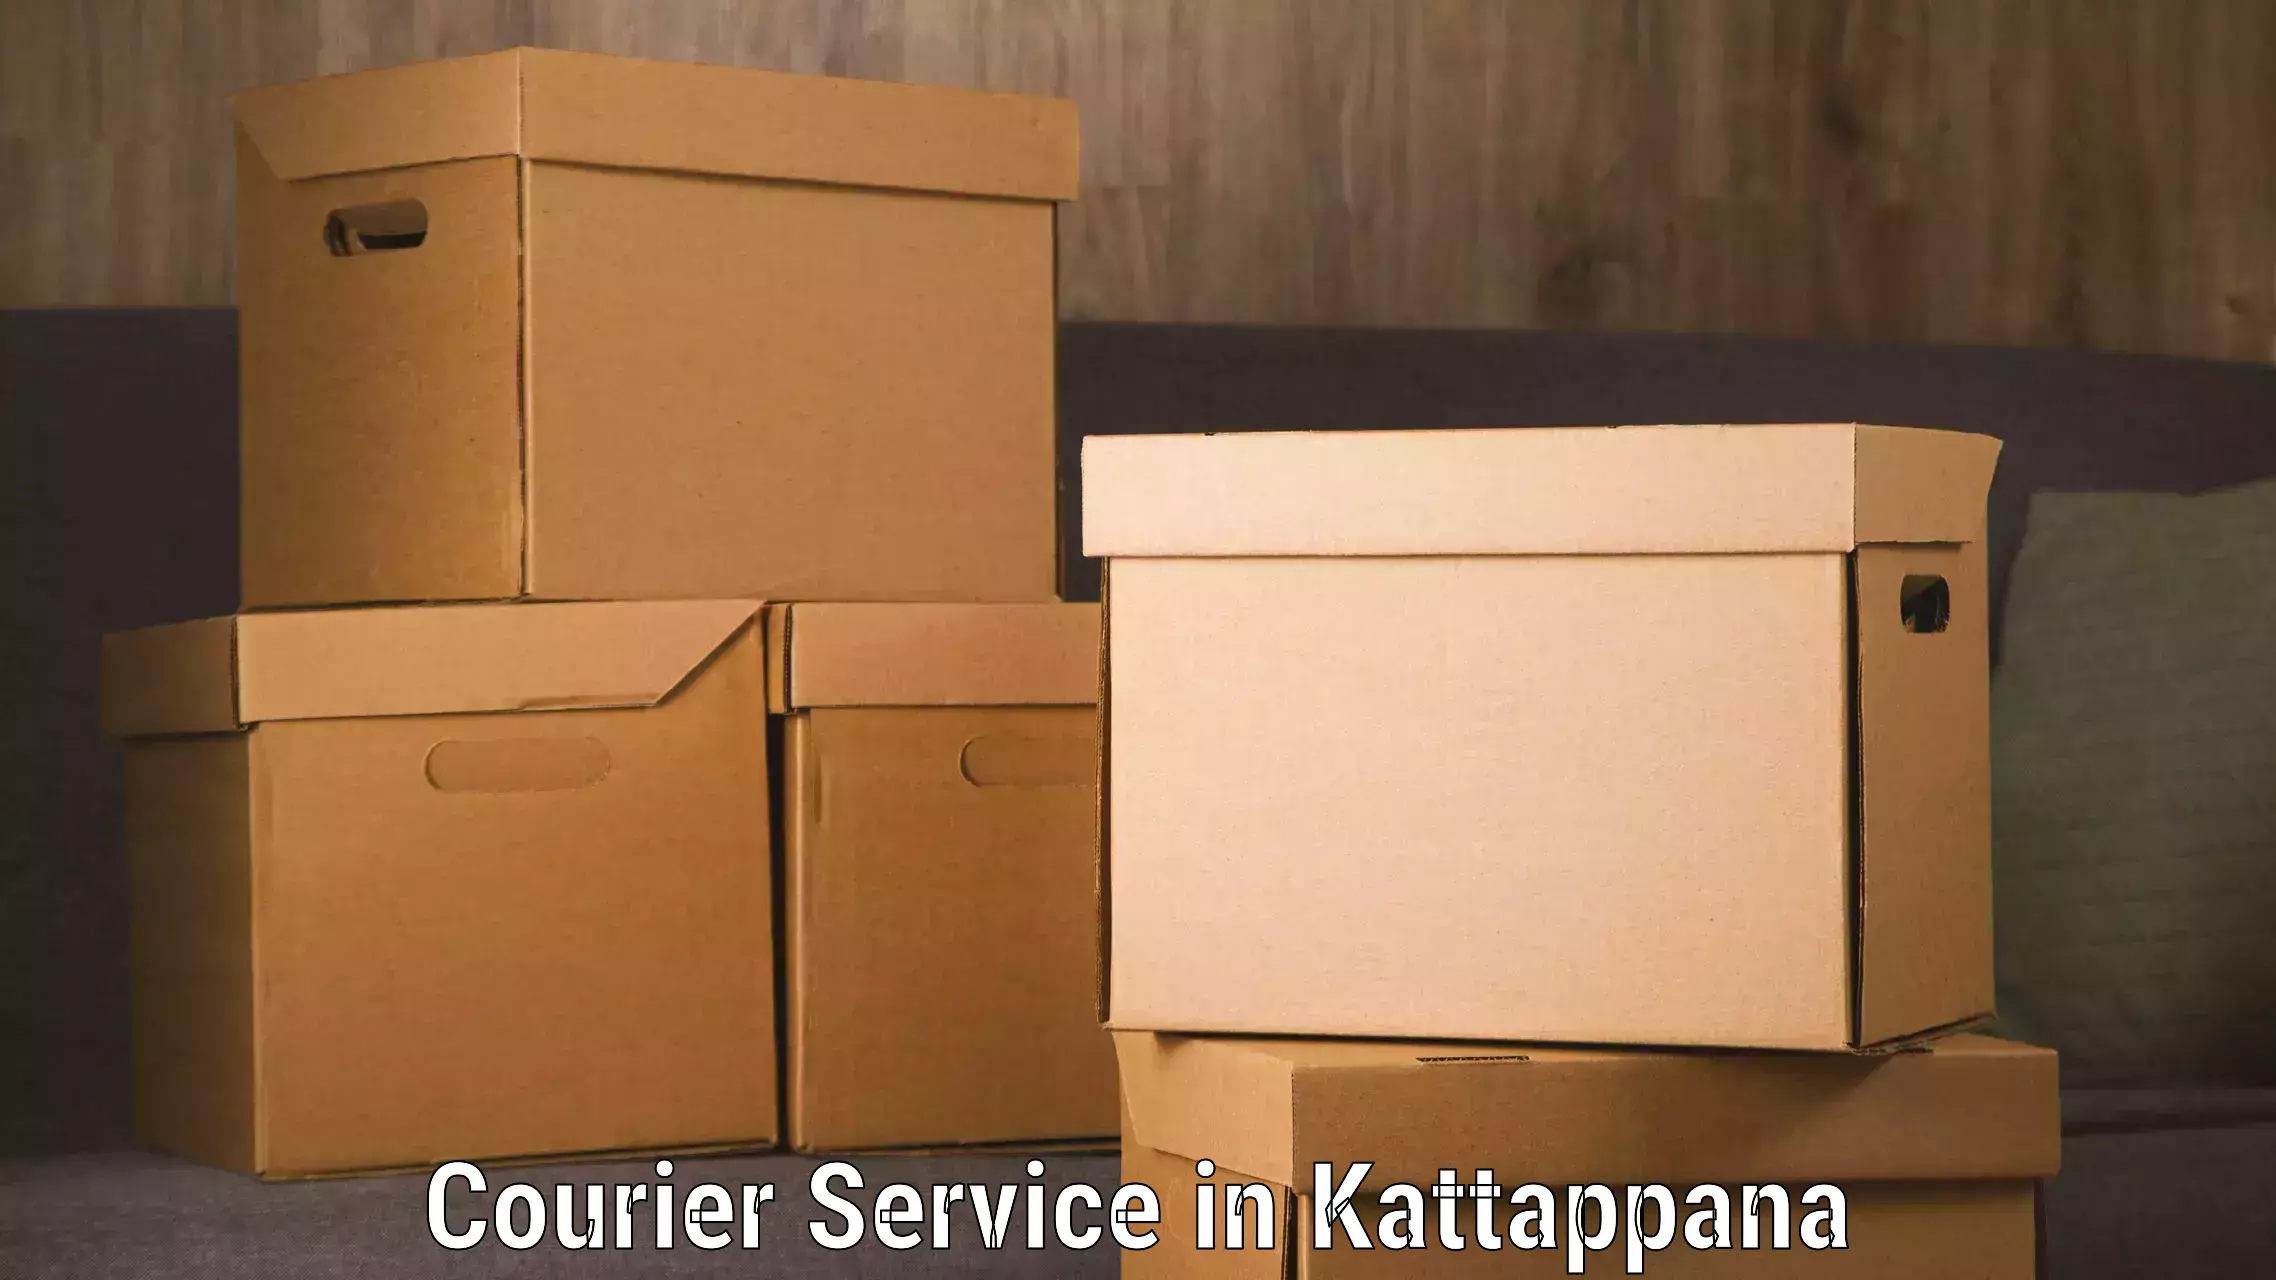 High-capacity shipping options in Kattappana